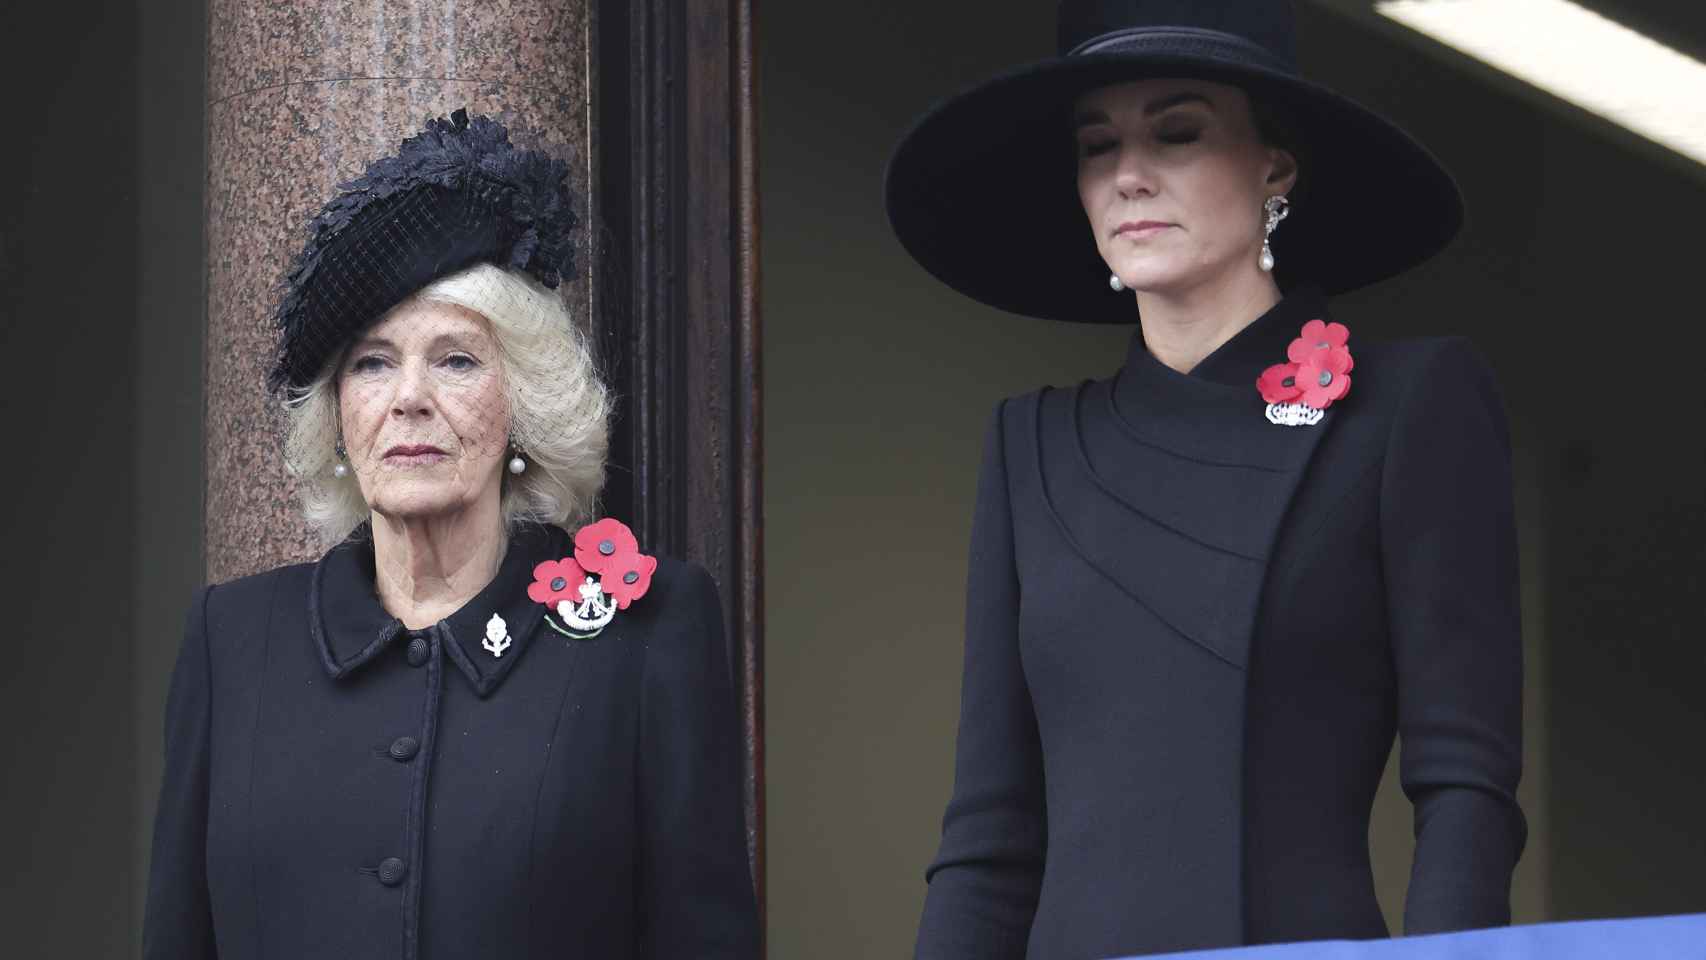 La reina consorte, Camilla, junto a Kate Middleton en el balcón.